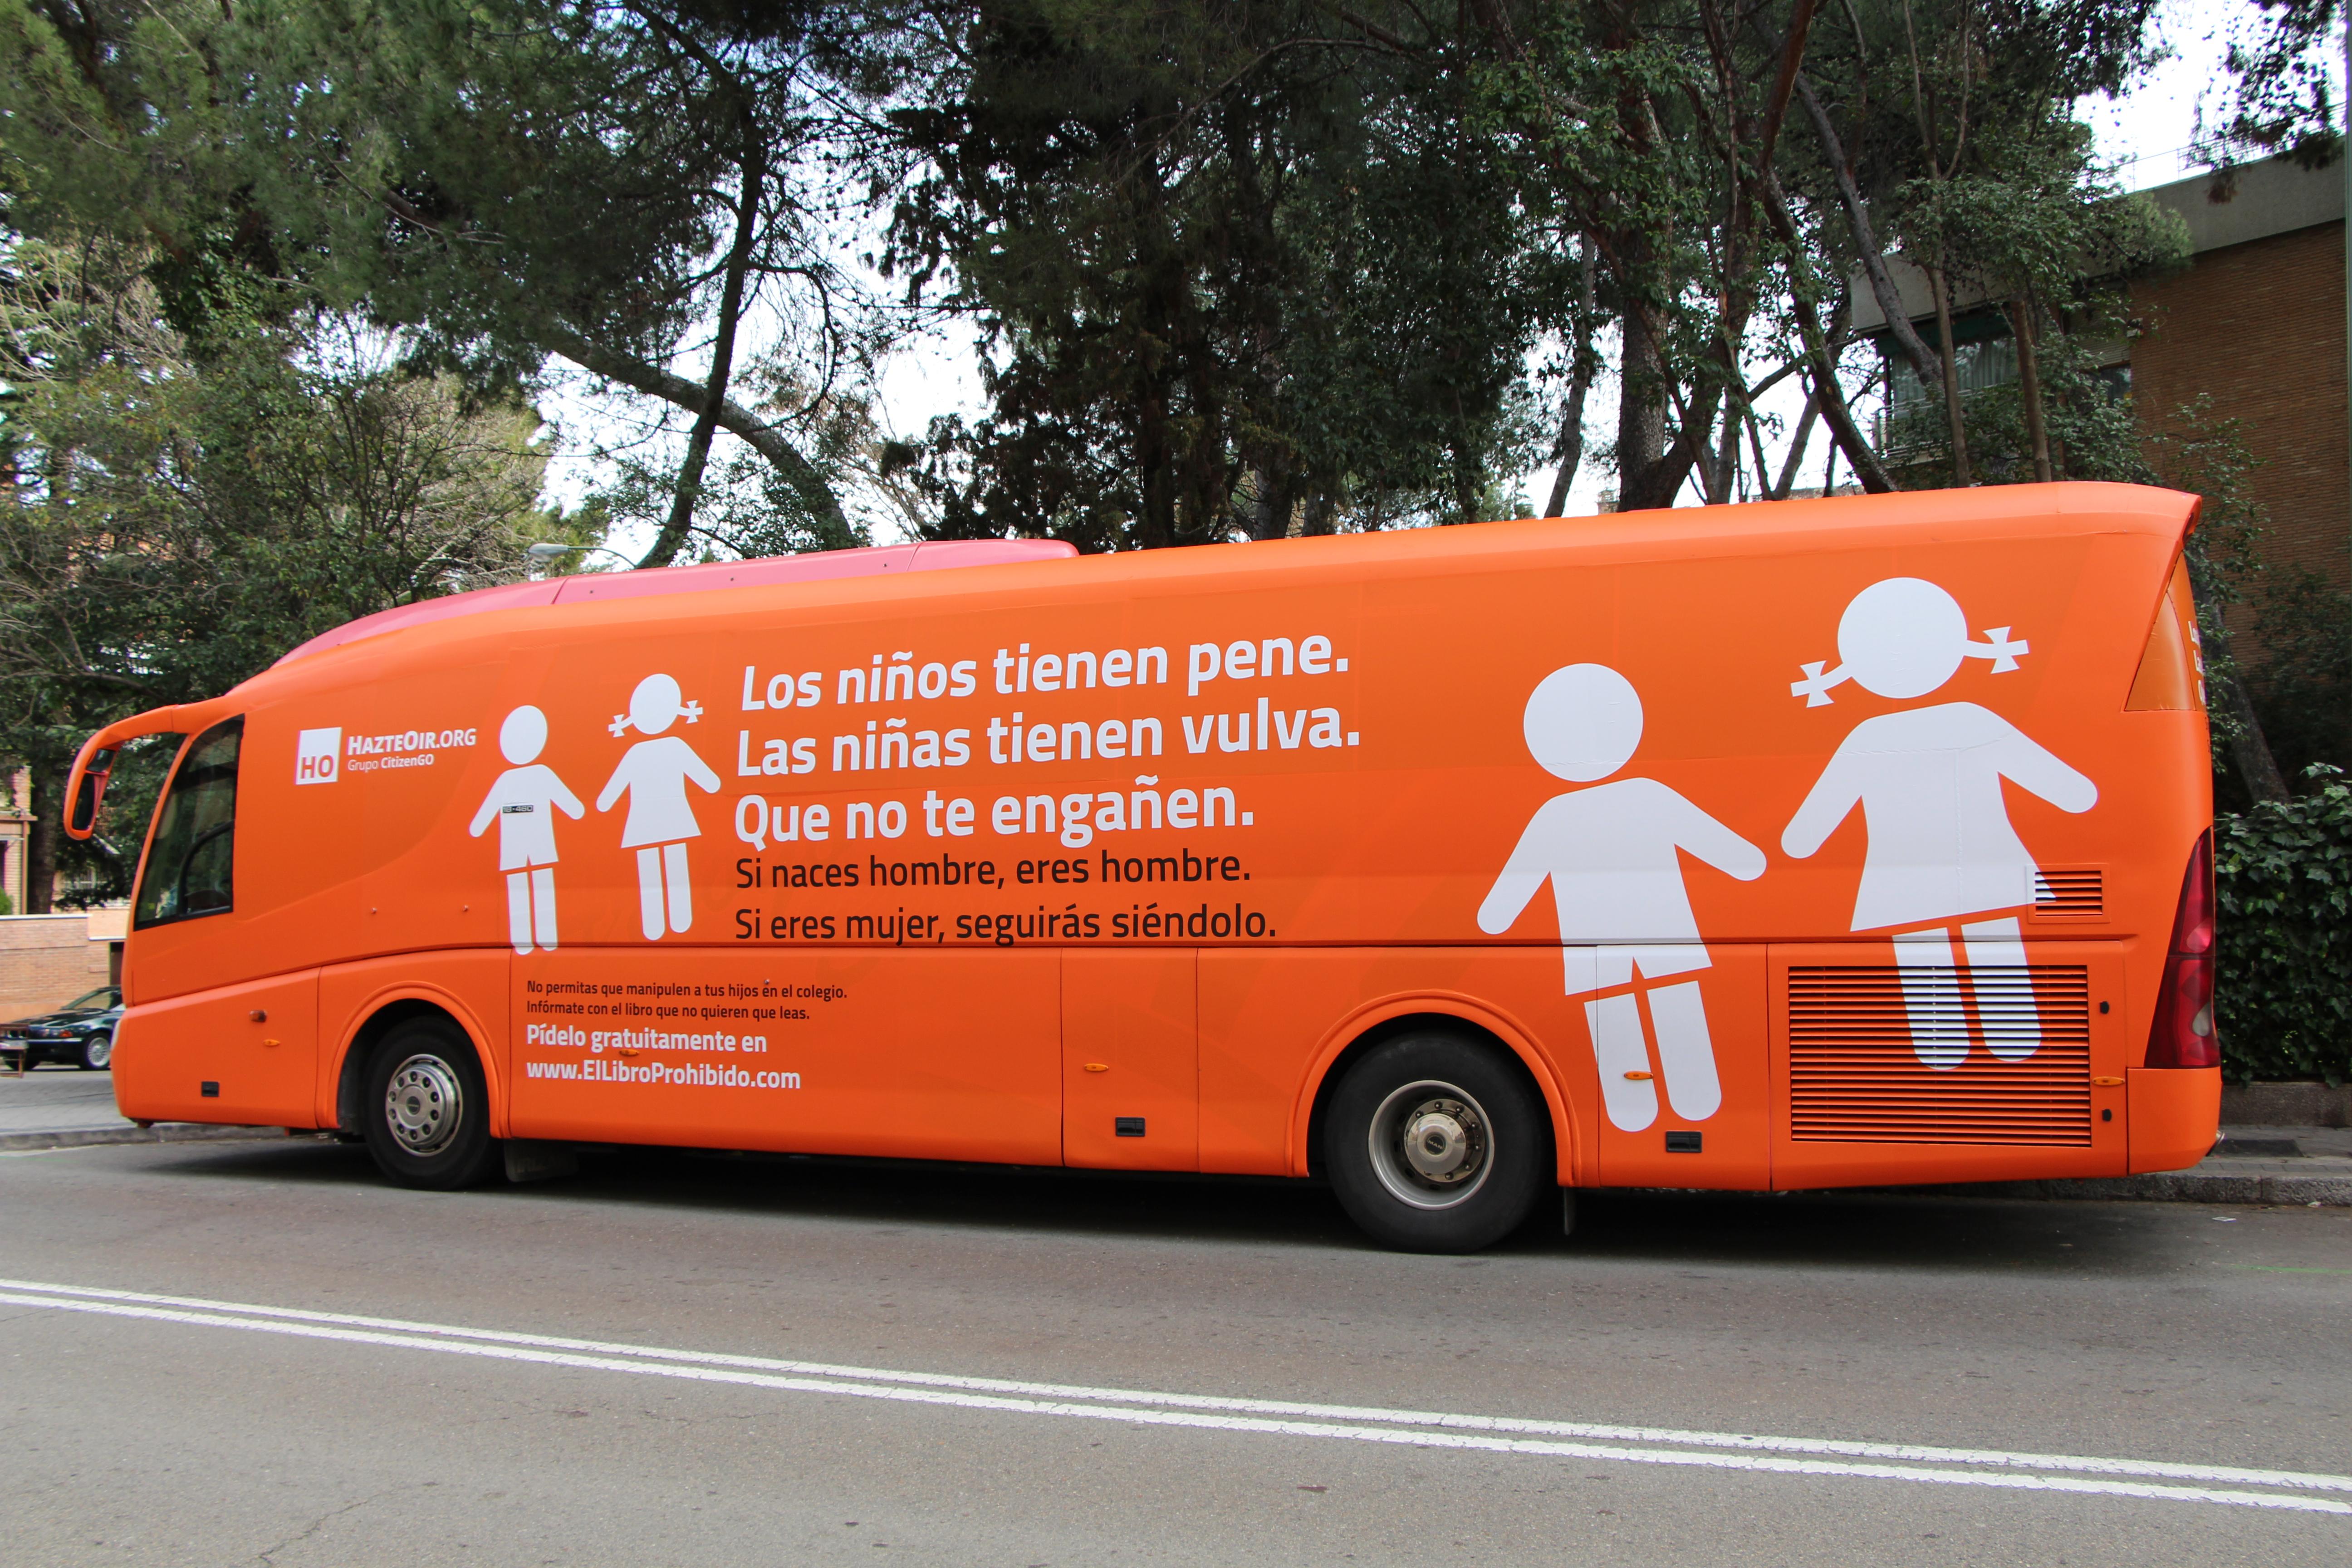 An orange HazteOir/CitizenGO bus in Spain